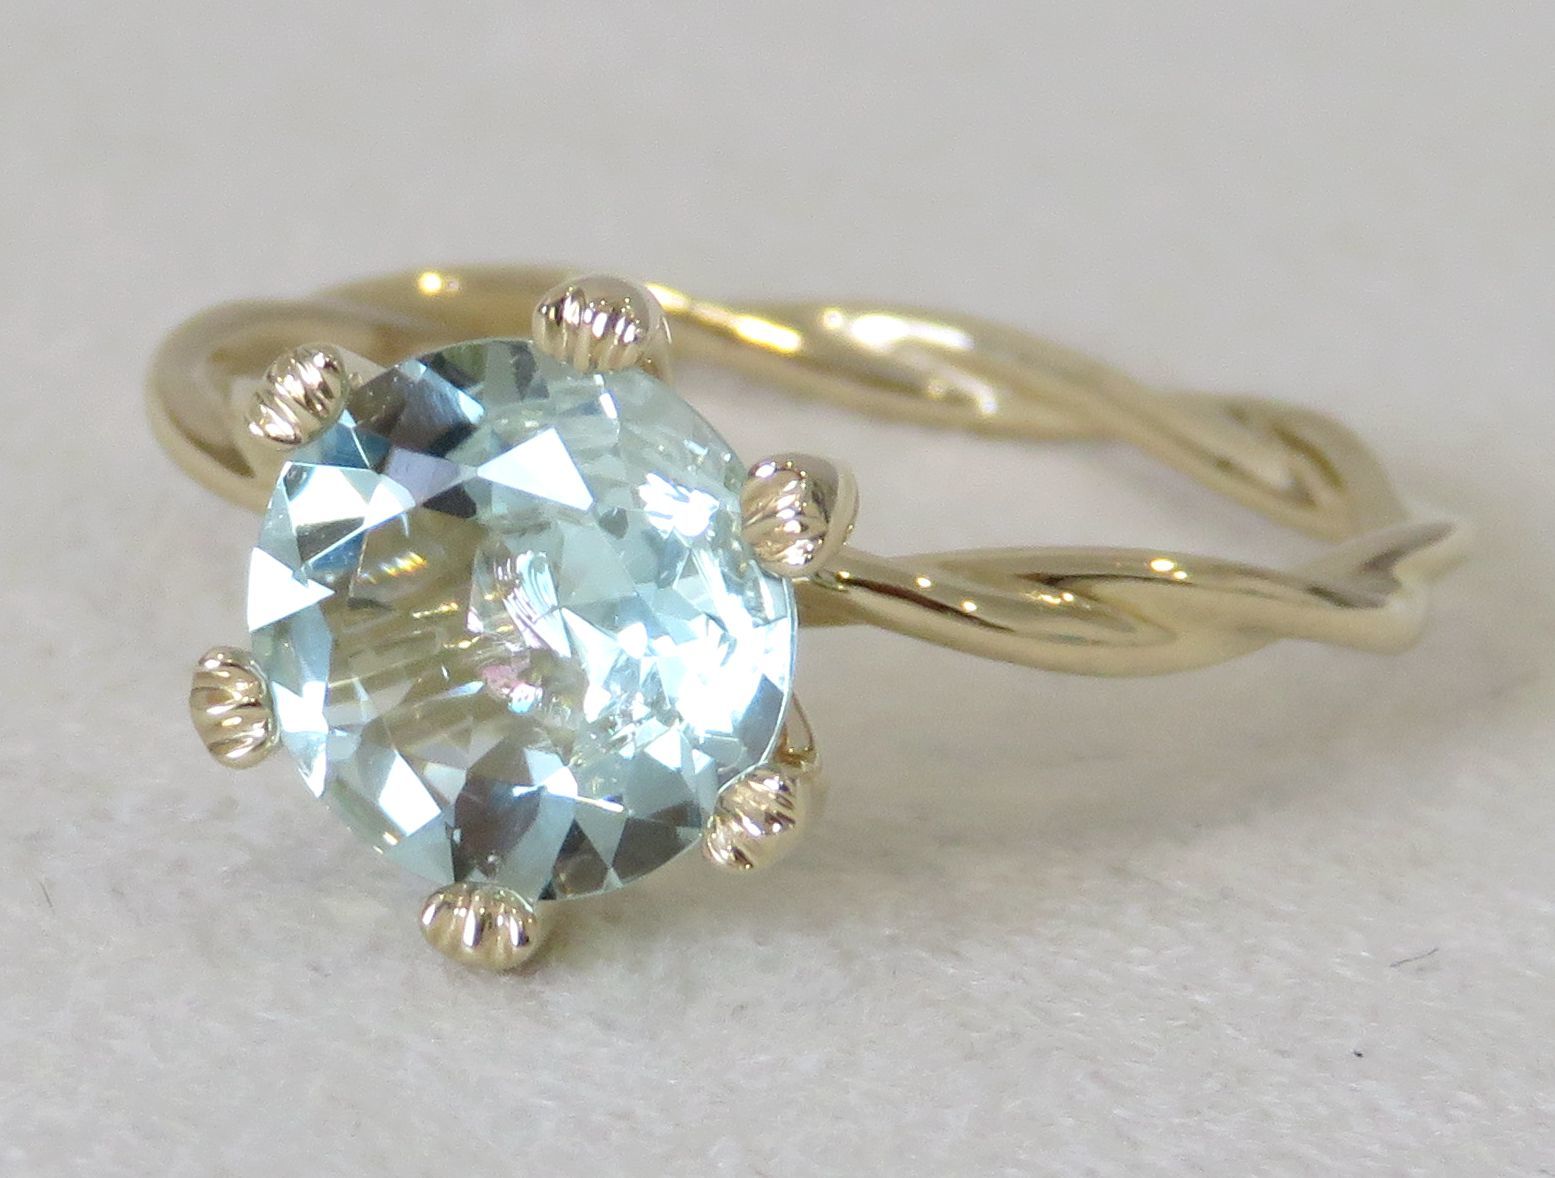 Aquamarine gold ring nz engagement